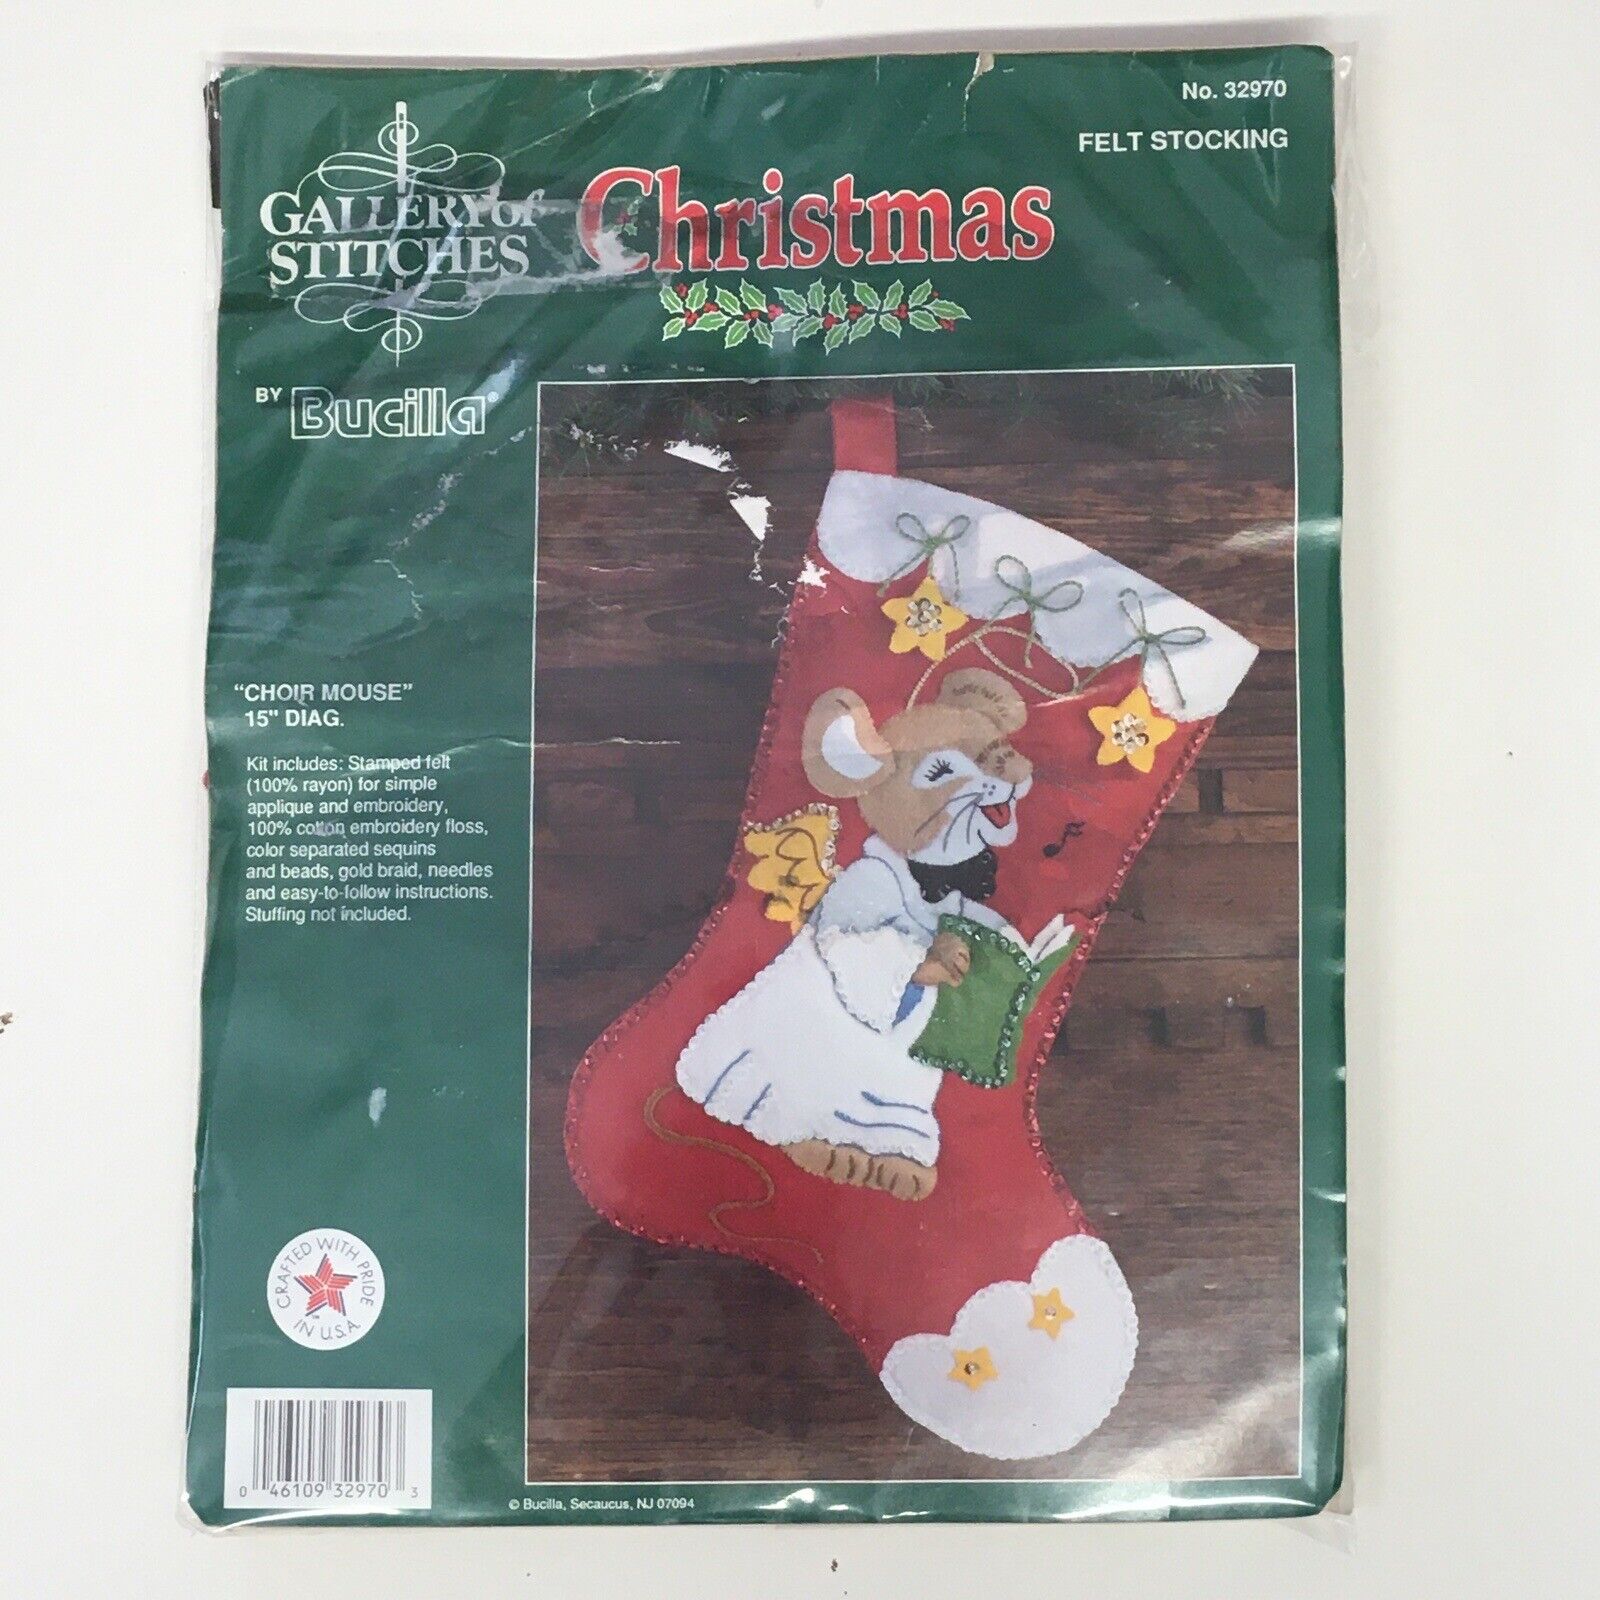 Bucilla Gallery of Stitches Choir Mouse Felt Christmas Stocking No 32970 NOS